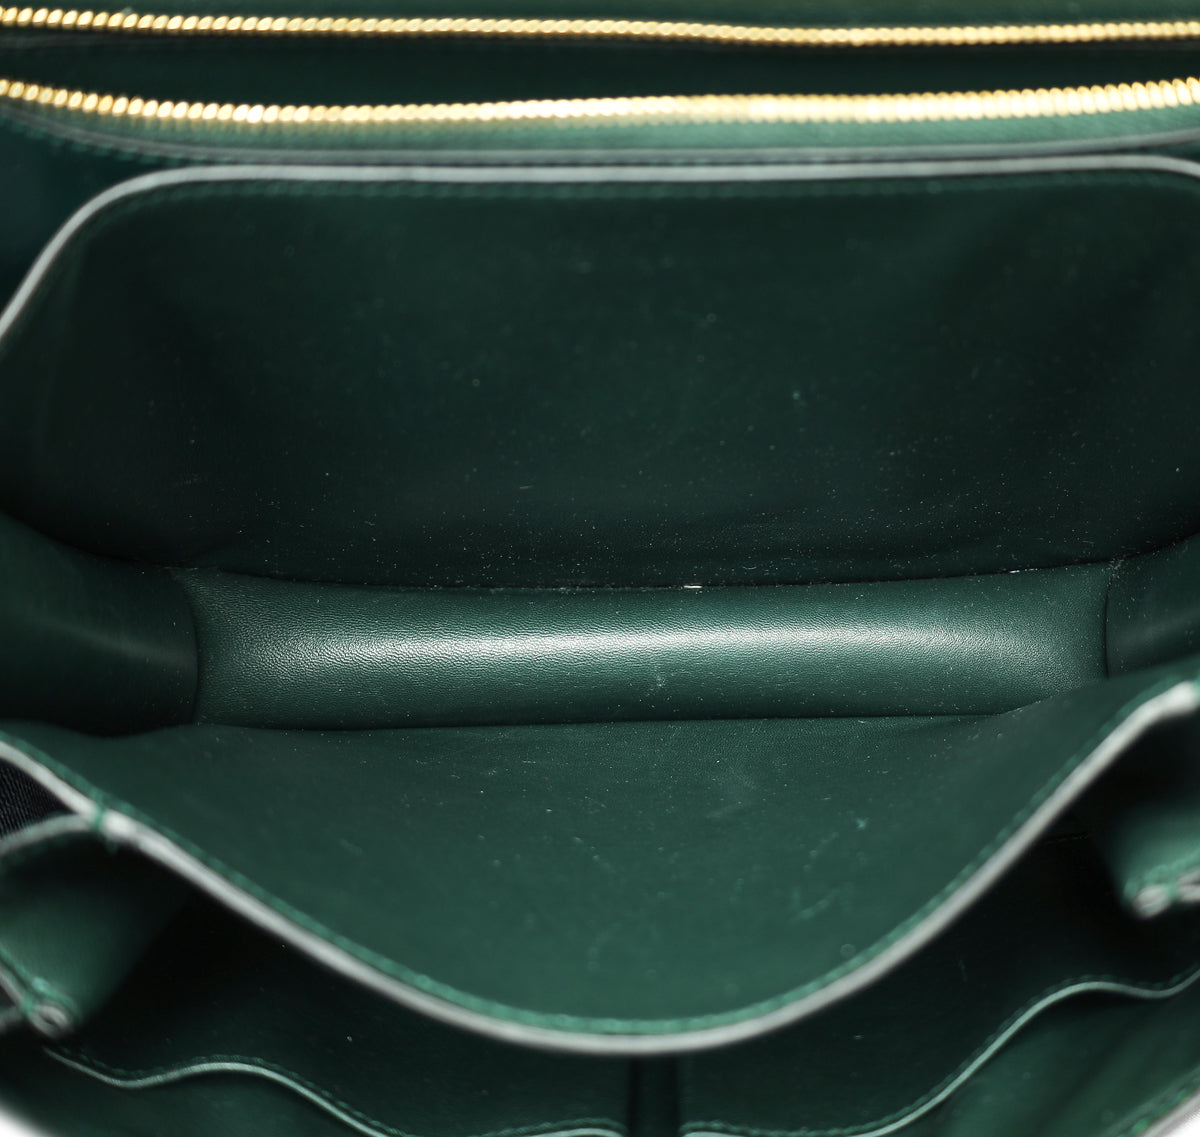 Celine Forest Green Classic Box Medium Bag